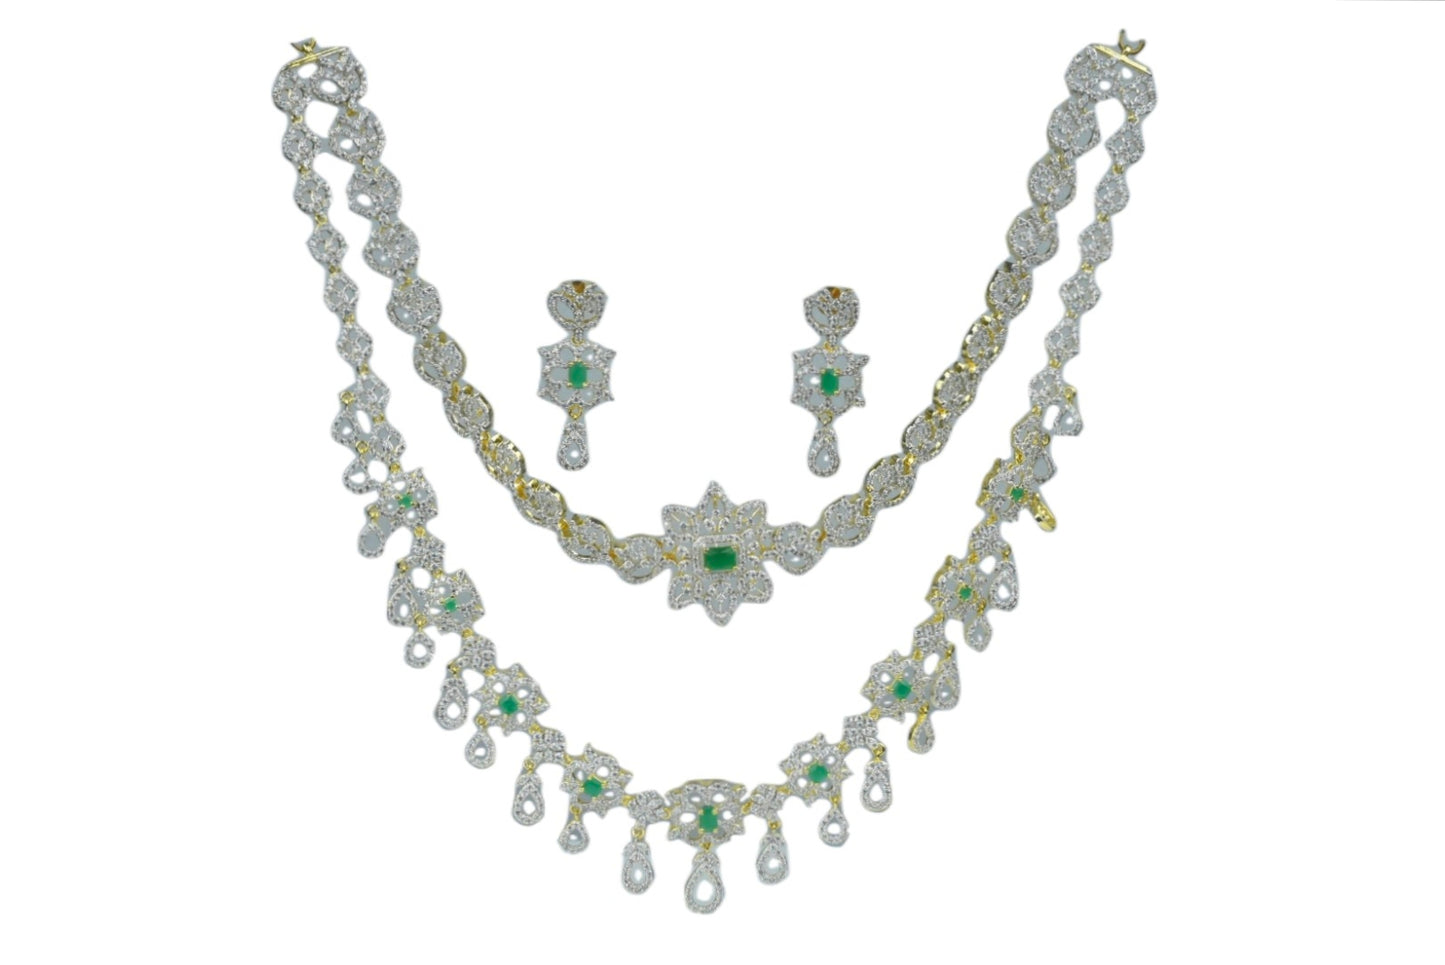 Stunning Two Layered Emralds American Diamonds Bridal Style Necklace Set